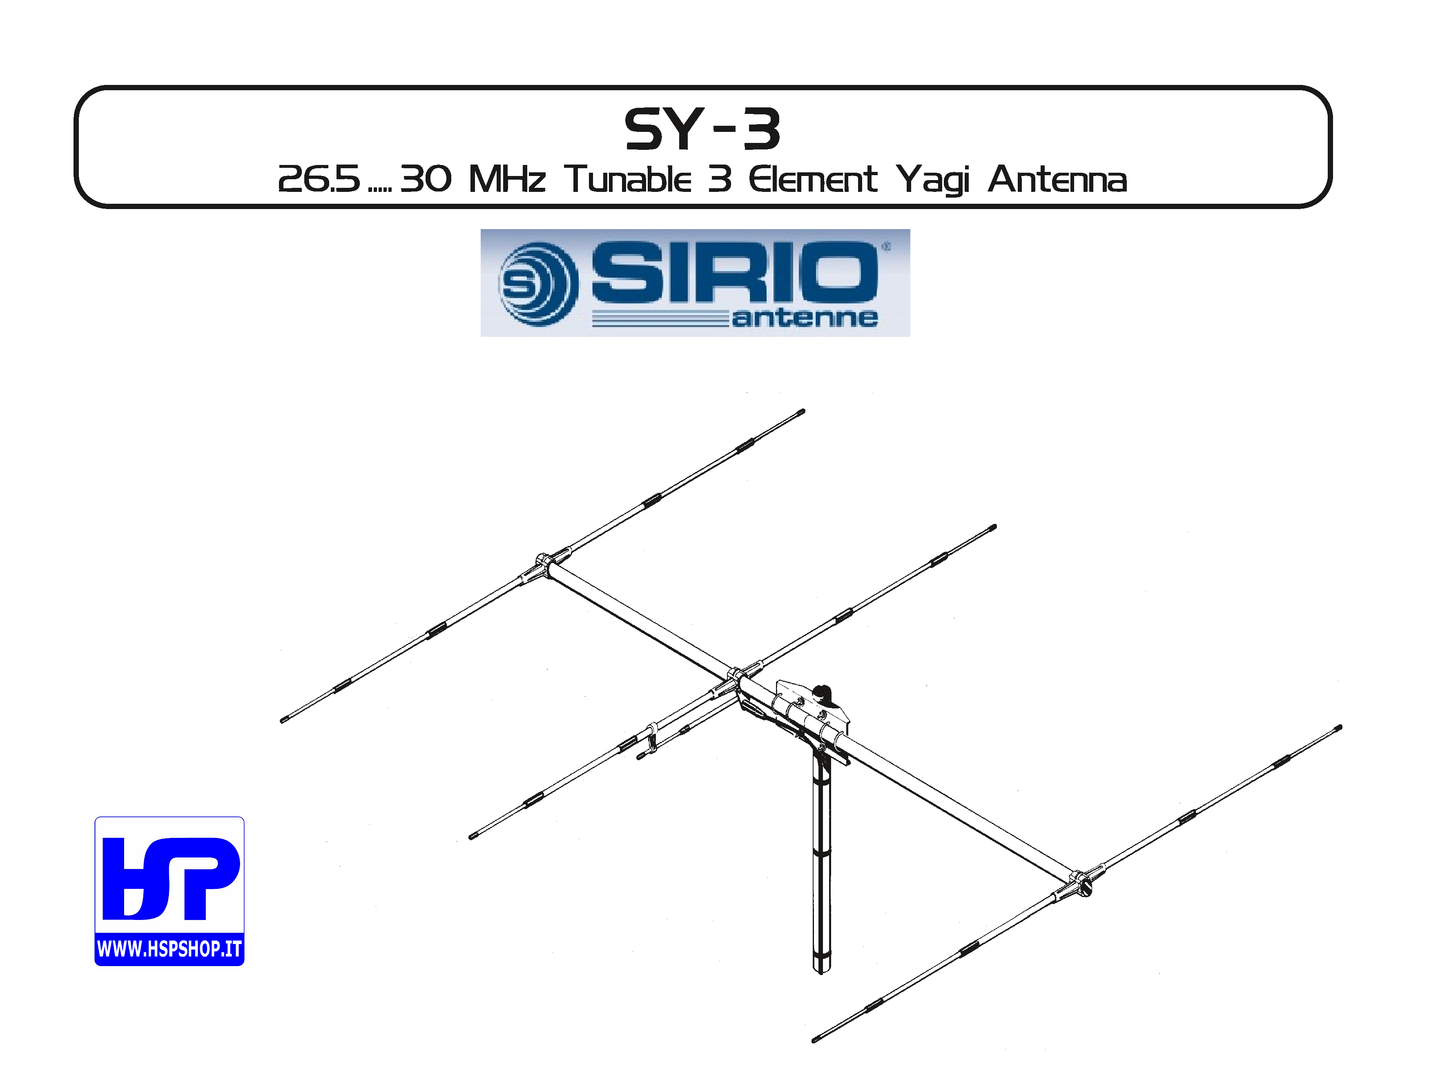 SIRIO - SY-3 - DIRETTIVA 3 ELEM. 26.5-30 MHz